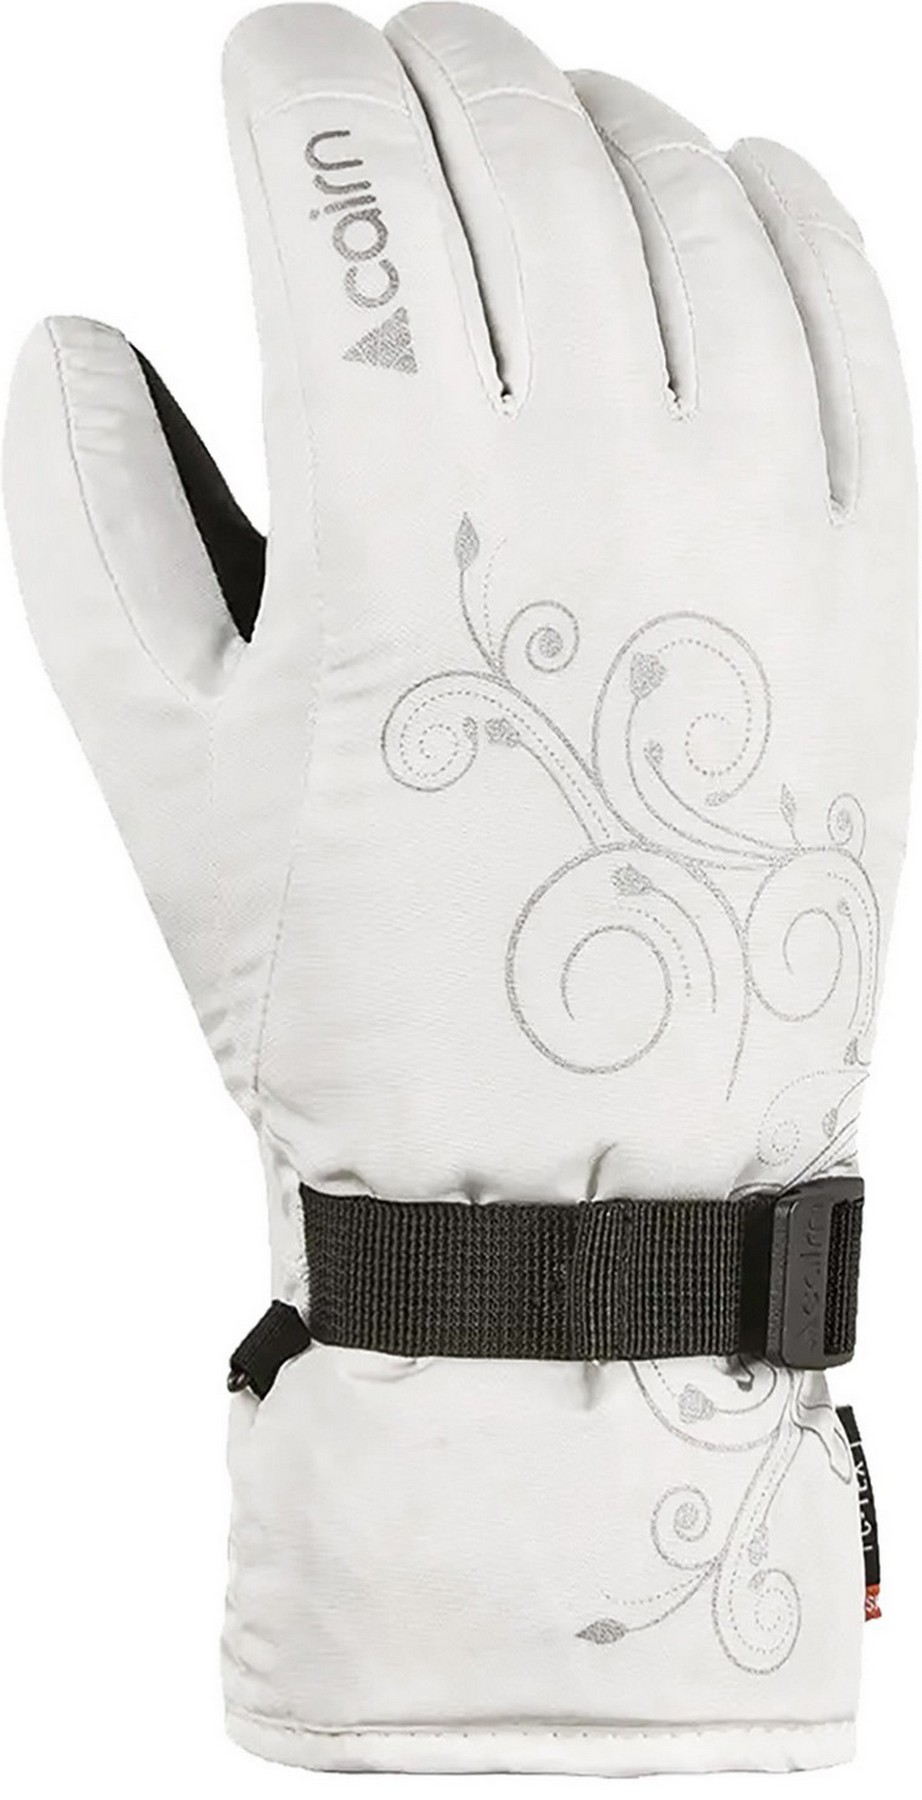 Лыжные перчатки для взрослых Cairn Augusta W white-grey 7